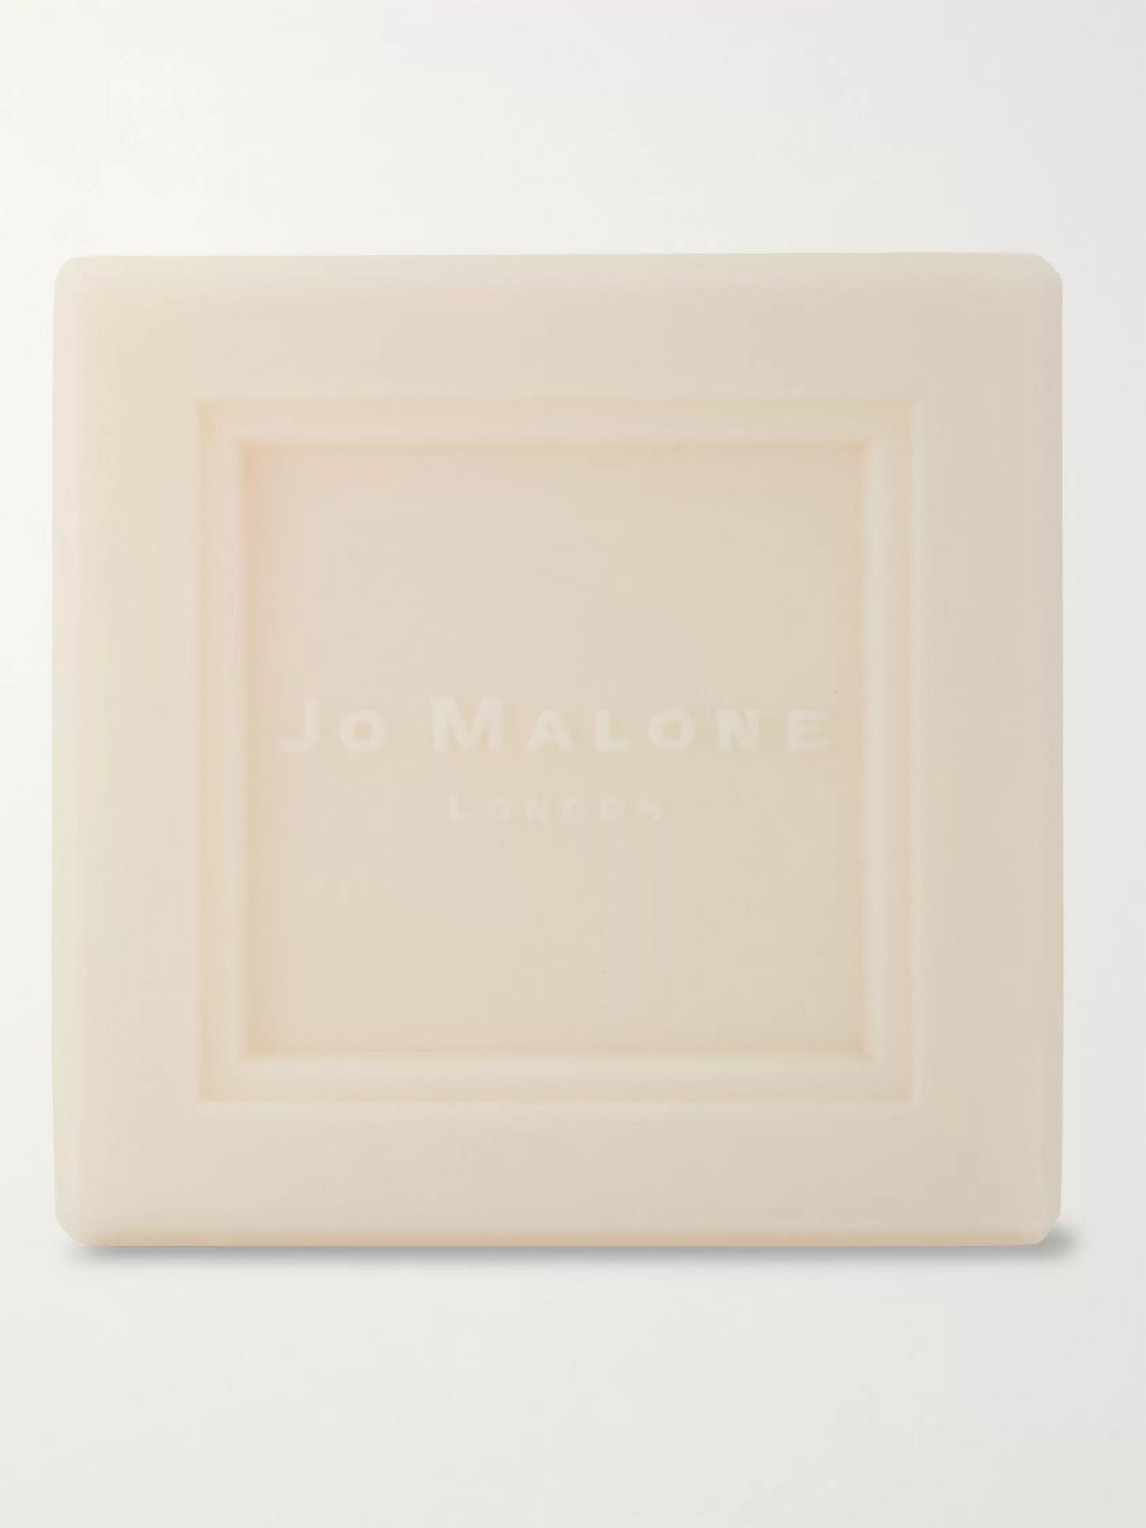 JO MALONE LONDON ENGLISH PEAR & FREESIA SOAP, 100G